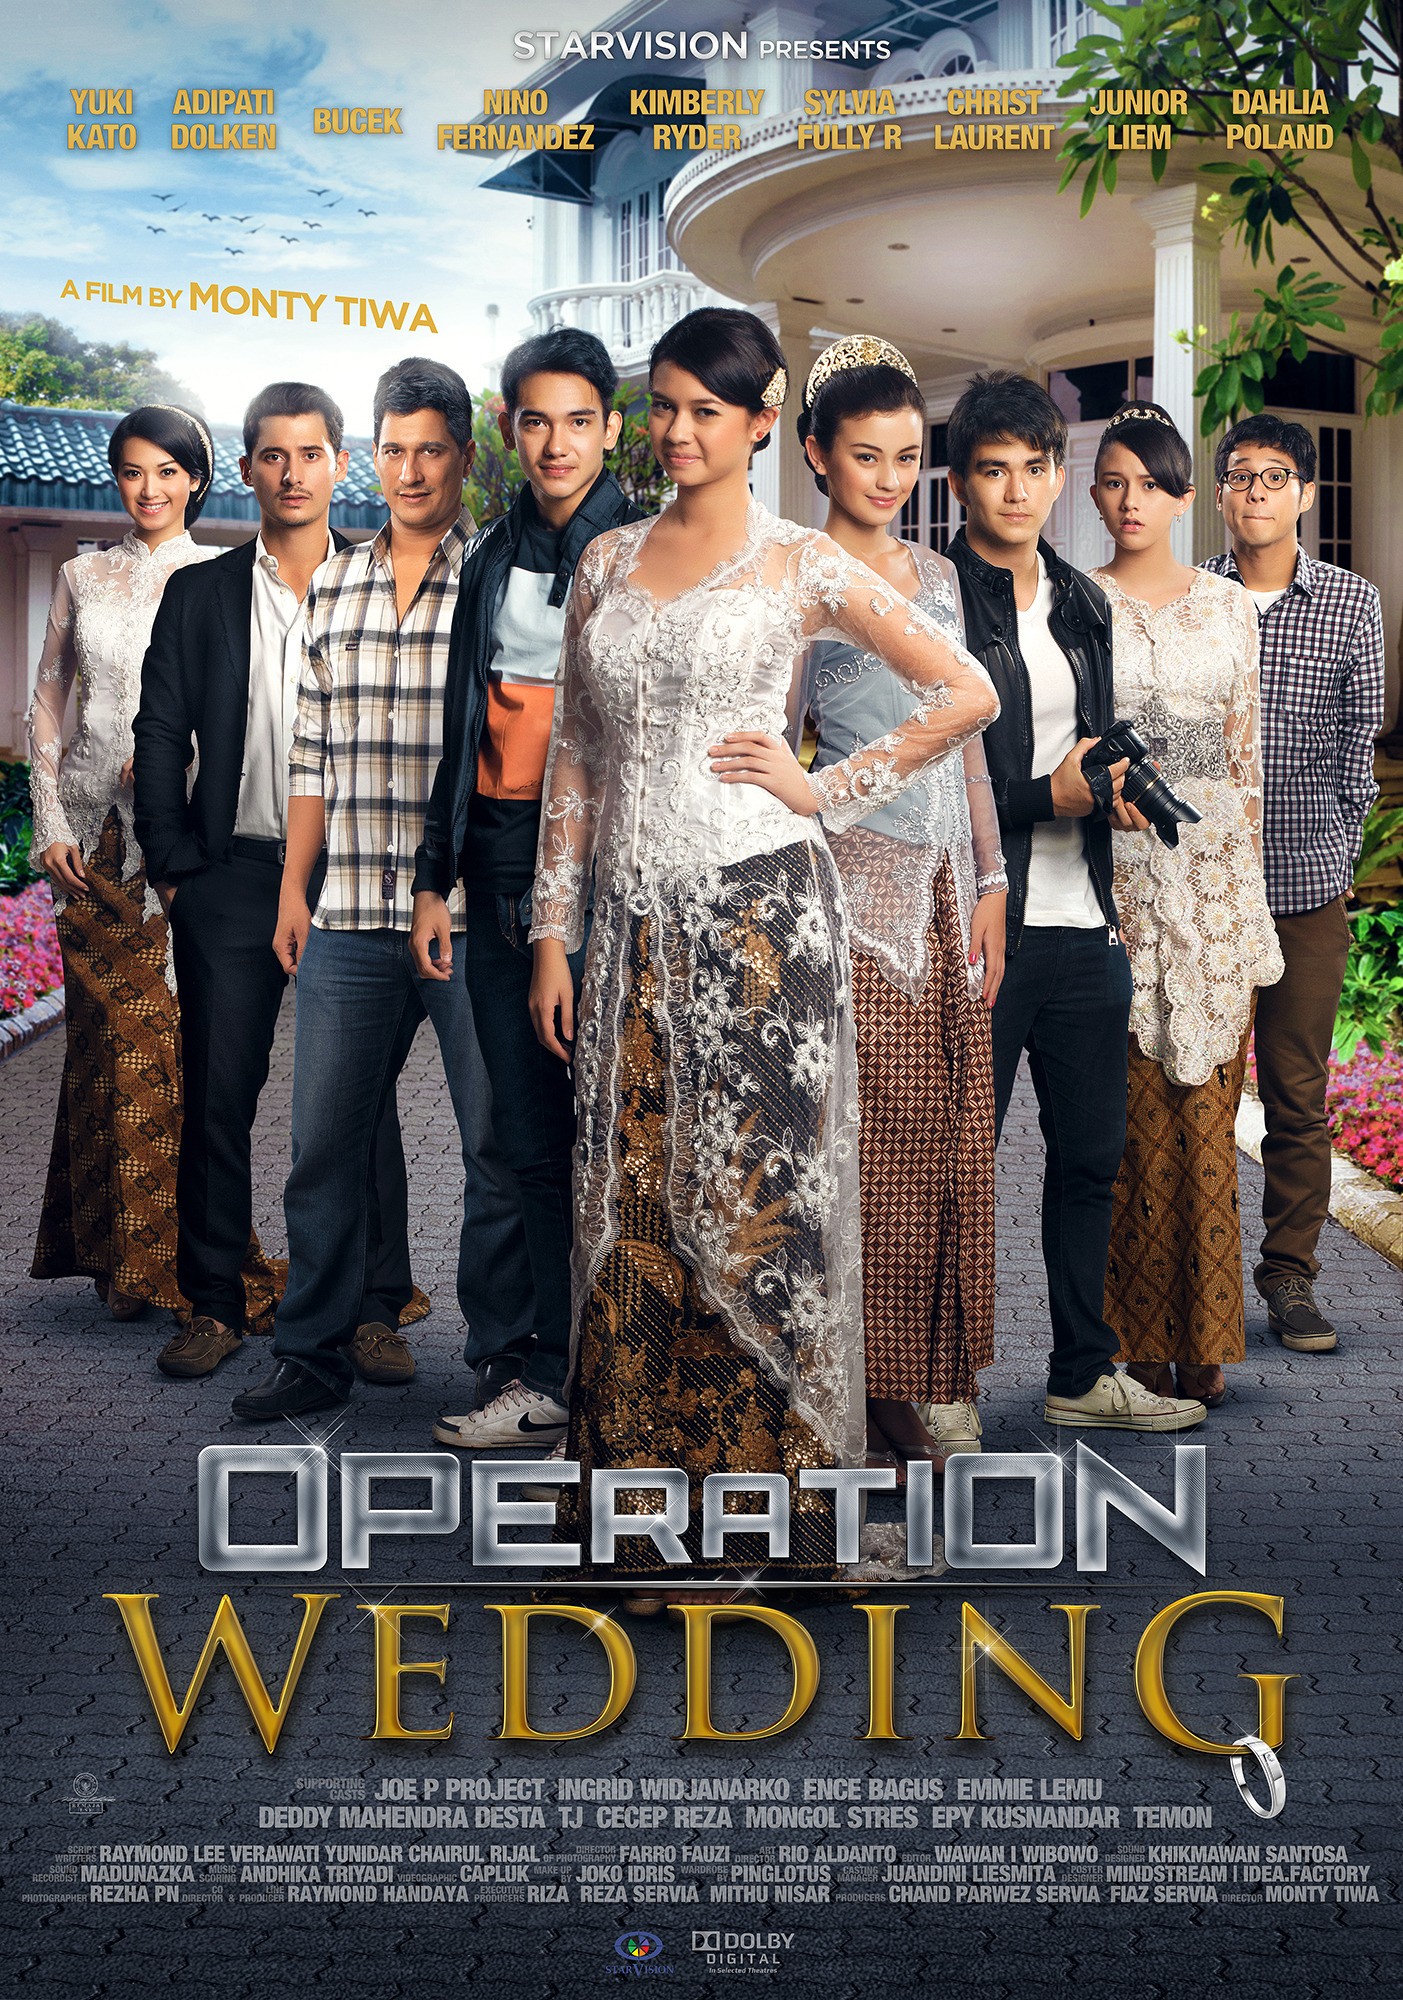 Mega Sized Movie Poster Image for Operation Wedding (#2 of 3)